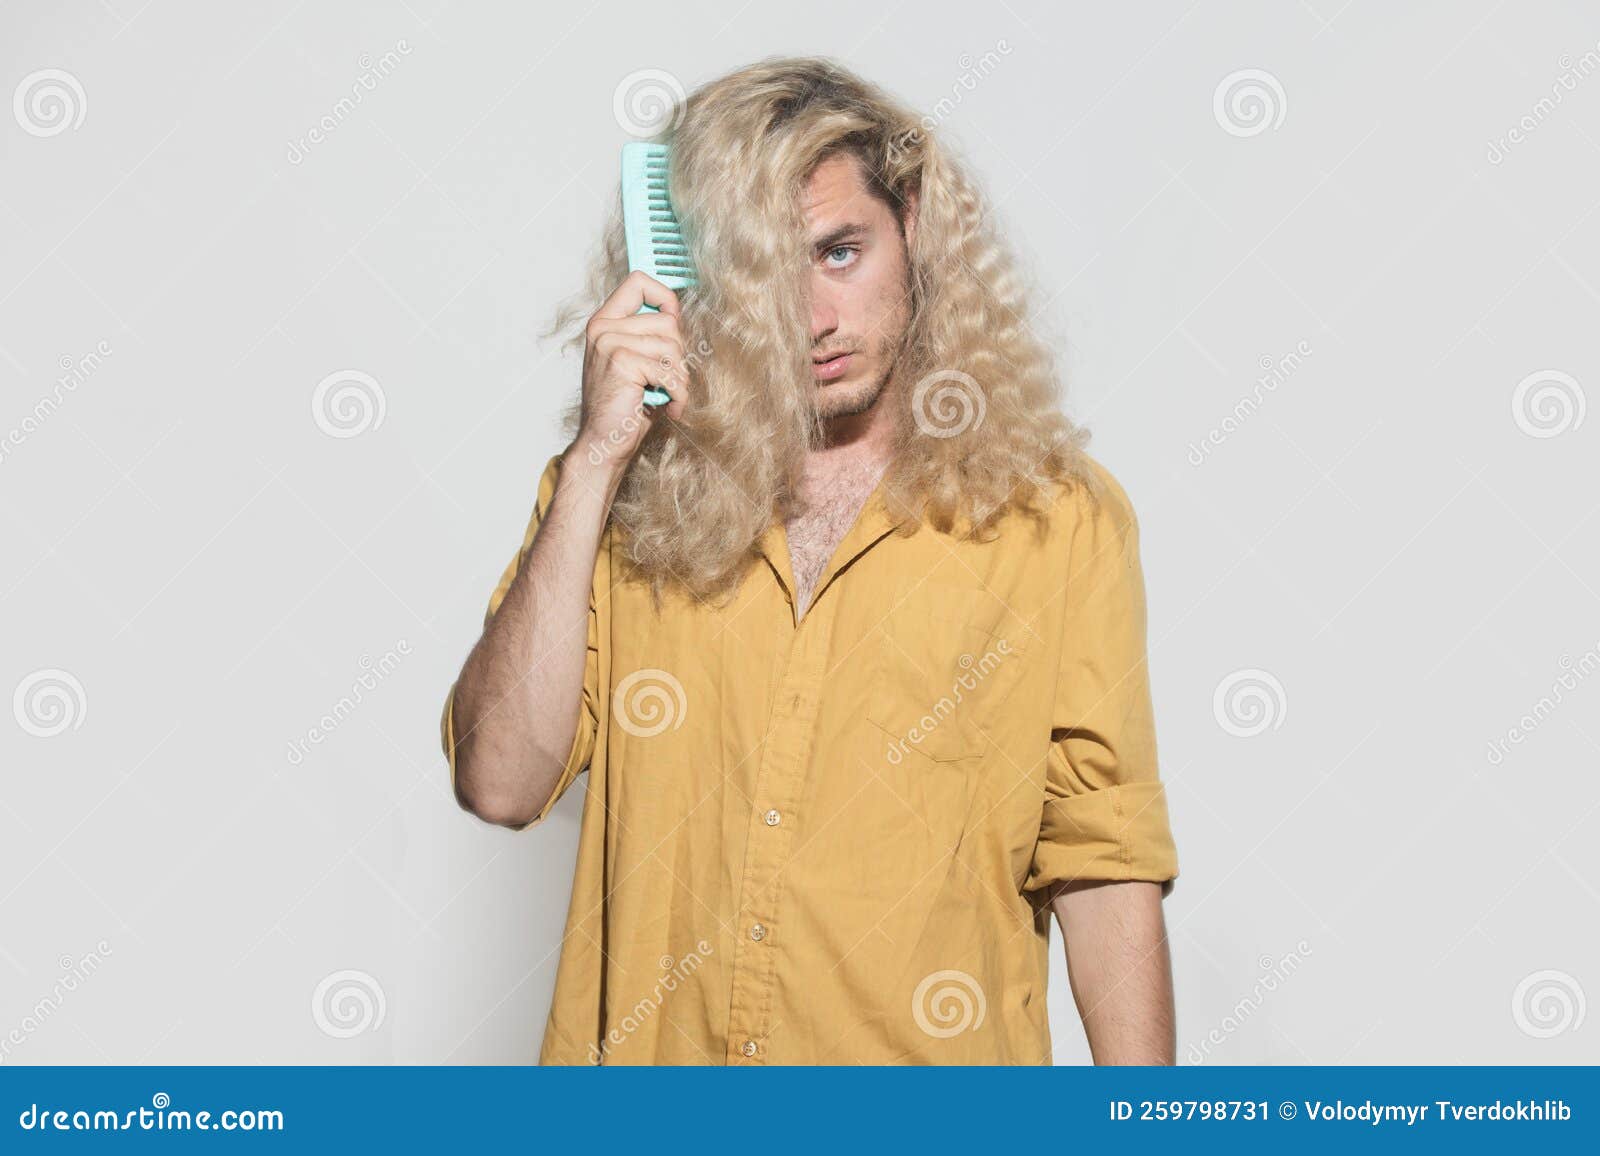 Blonde Man with Beard Photo - wide 2